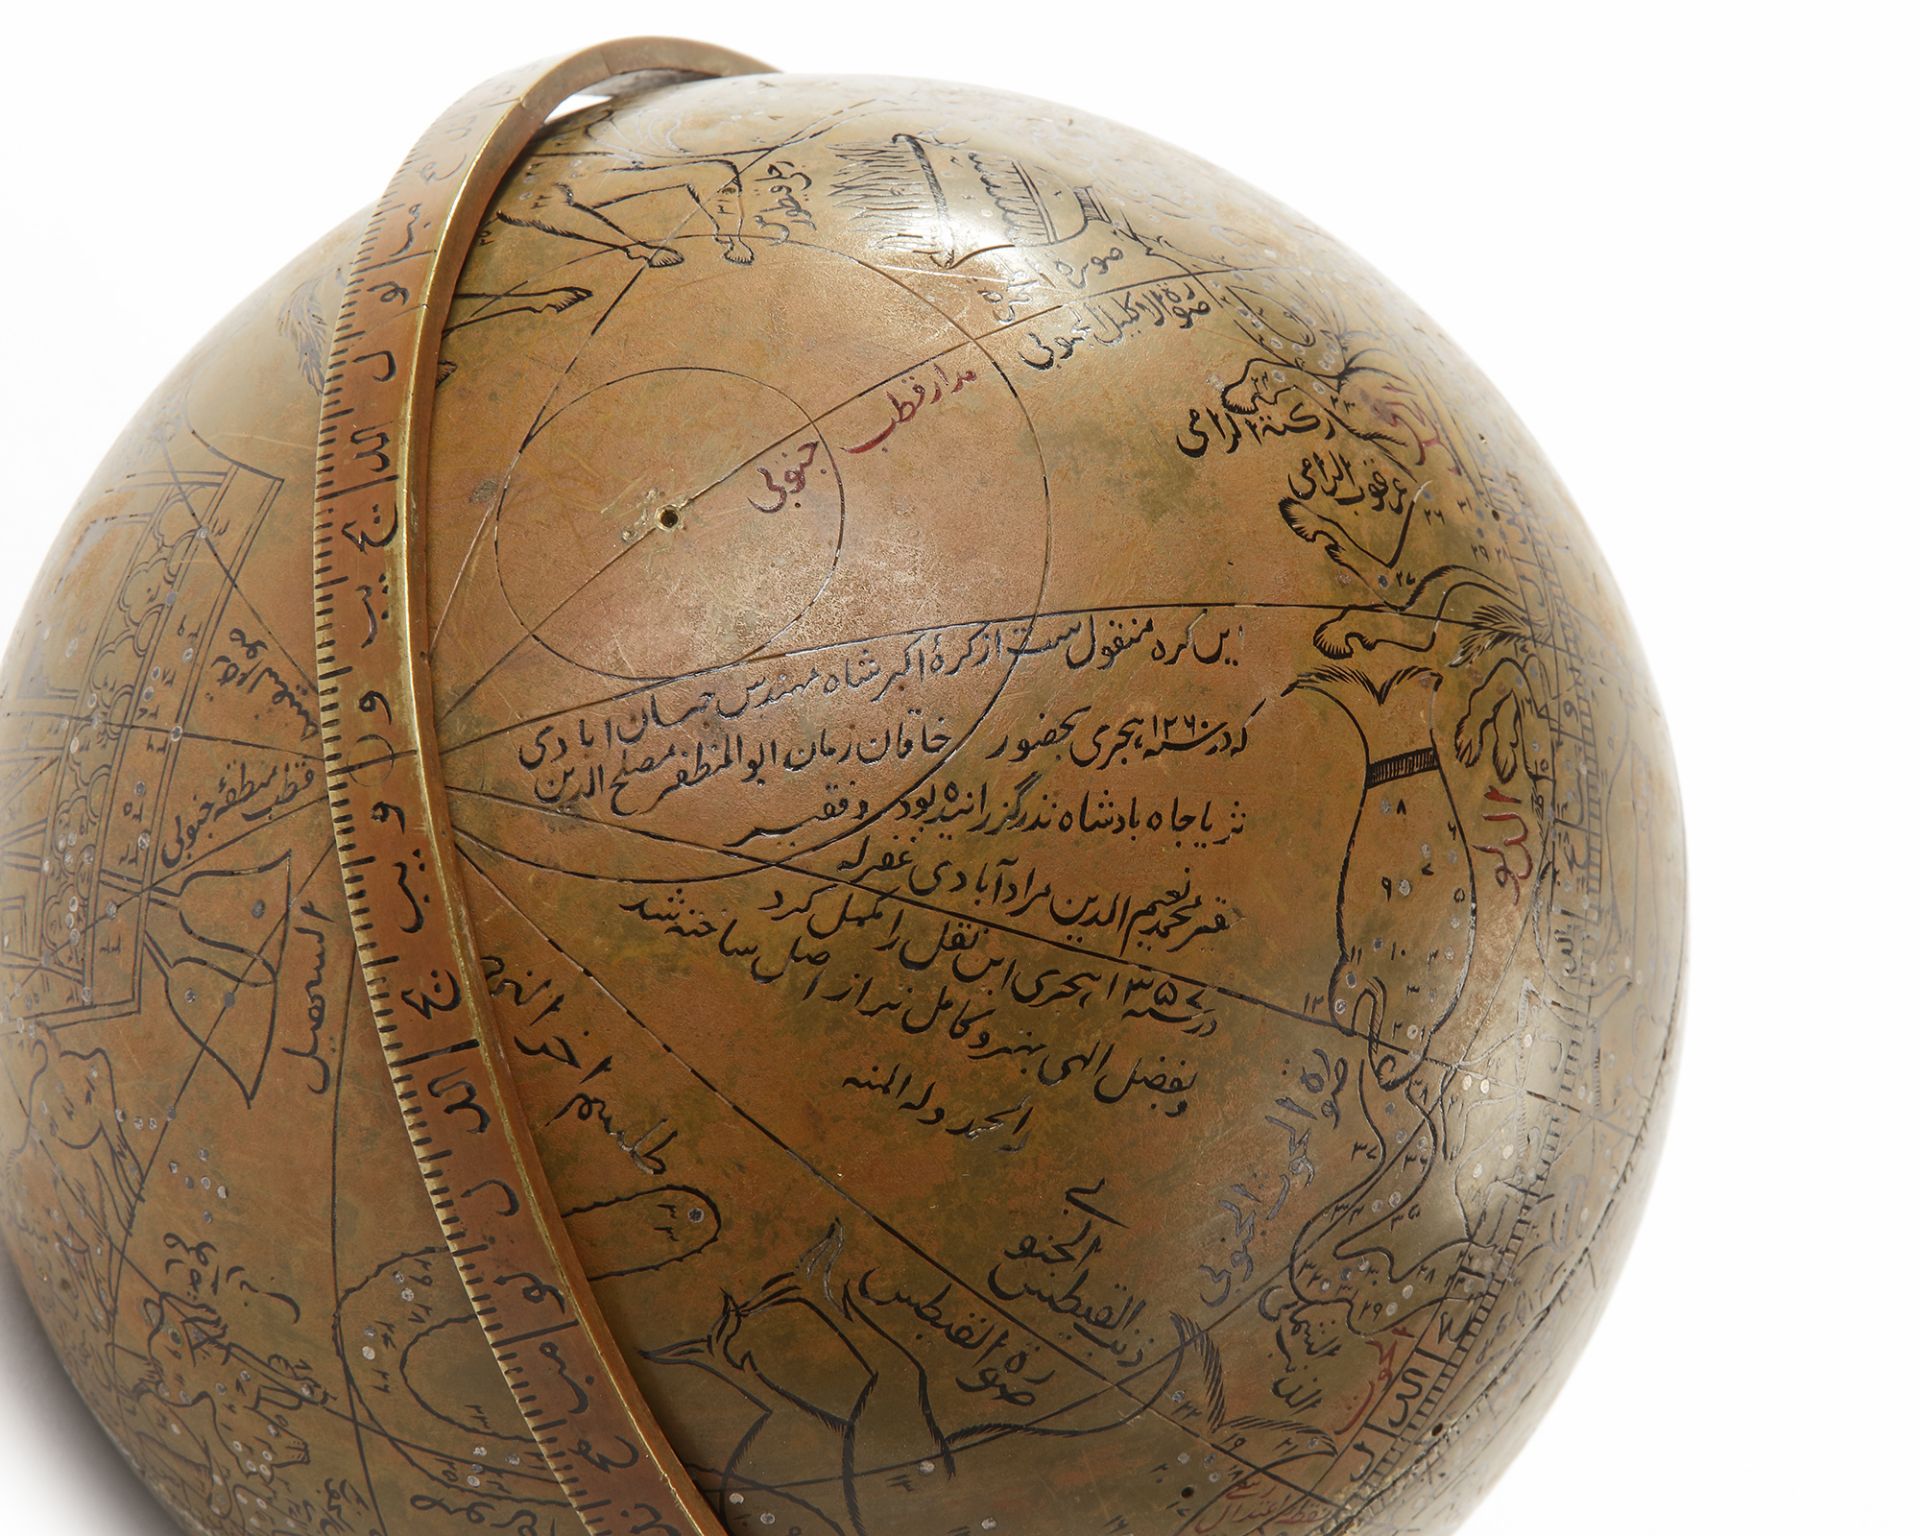 A BRASS CELESTIAL GLOBE SIGNED BY MUHAMED NAIEM ALDEEN MORAD ABADI PERSIA, 1357 AH/1938 AD - Image 2 of 6